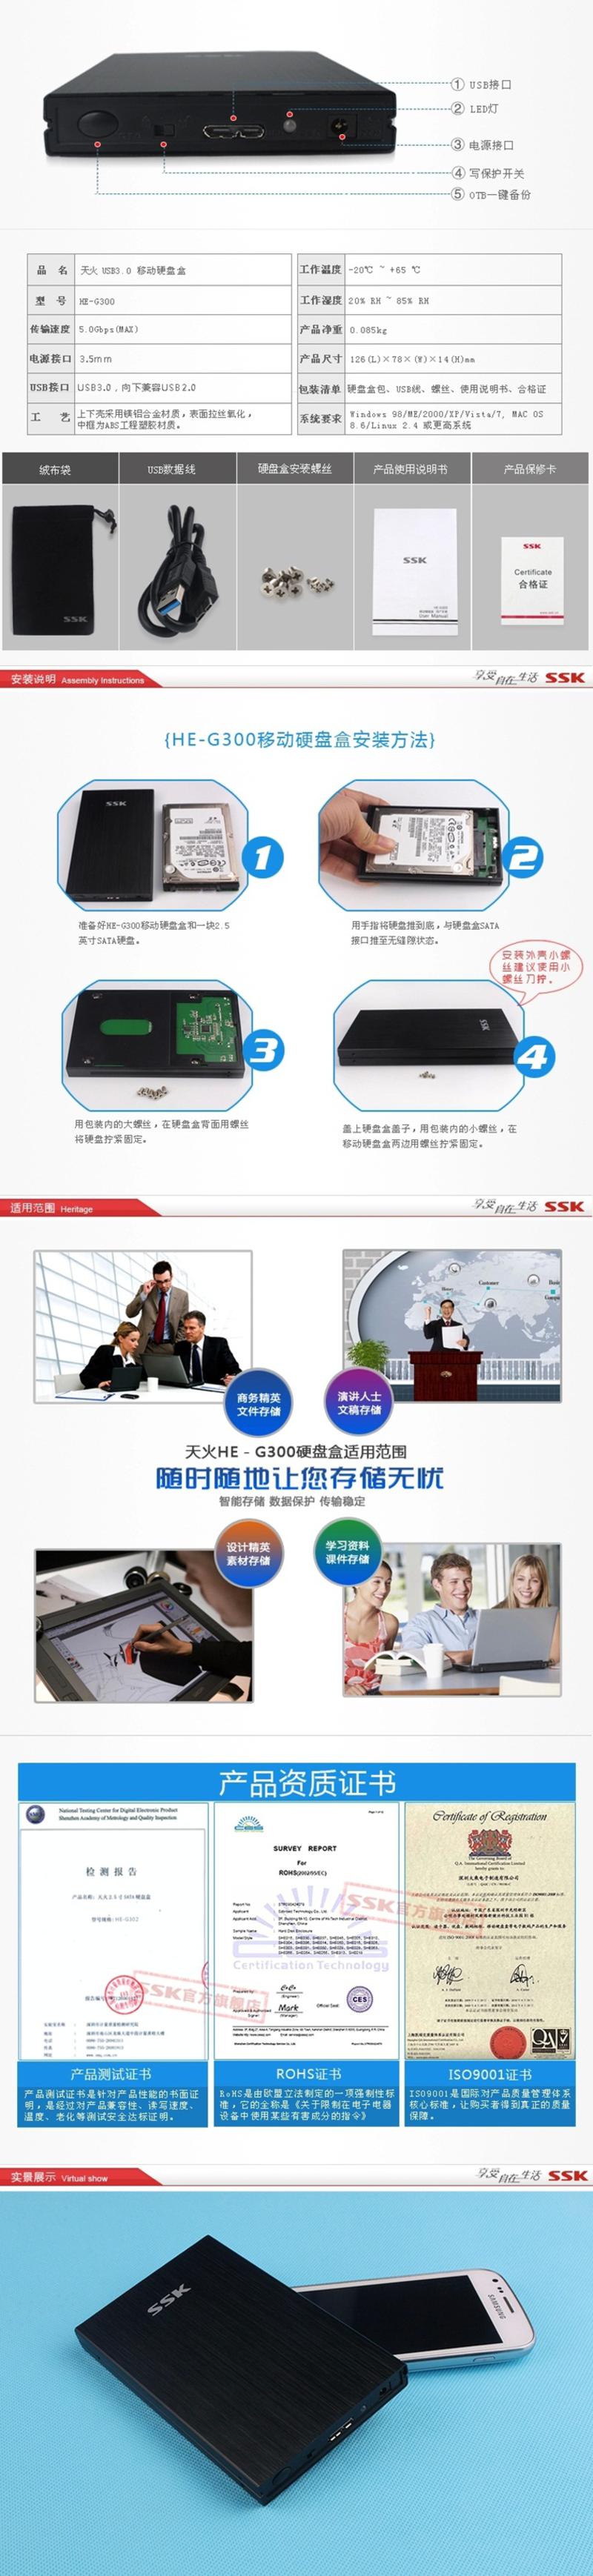 SSK飚王 天火 HE-G300 USB3.0 2.5寸移动硬盘盒 支持SSD固态硬盘 sata串口